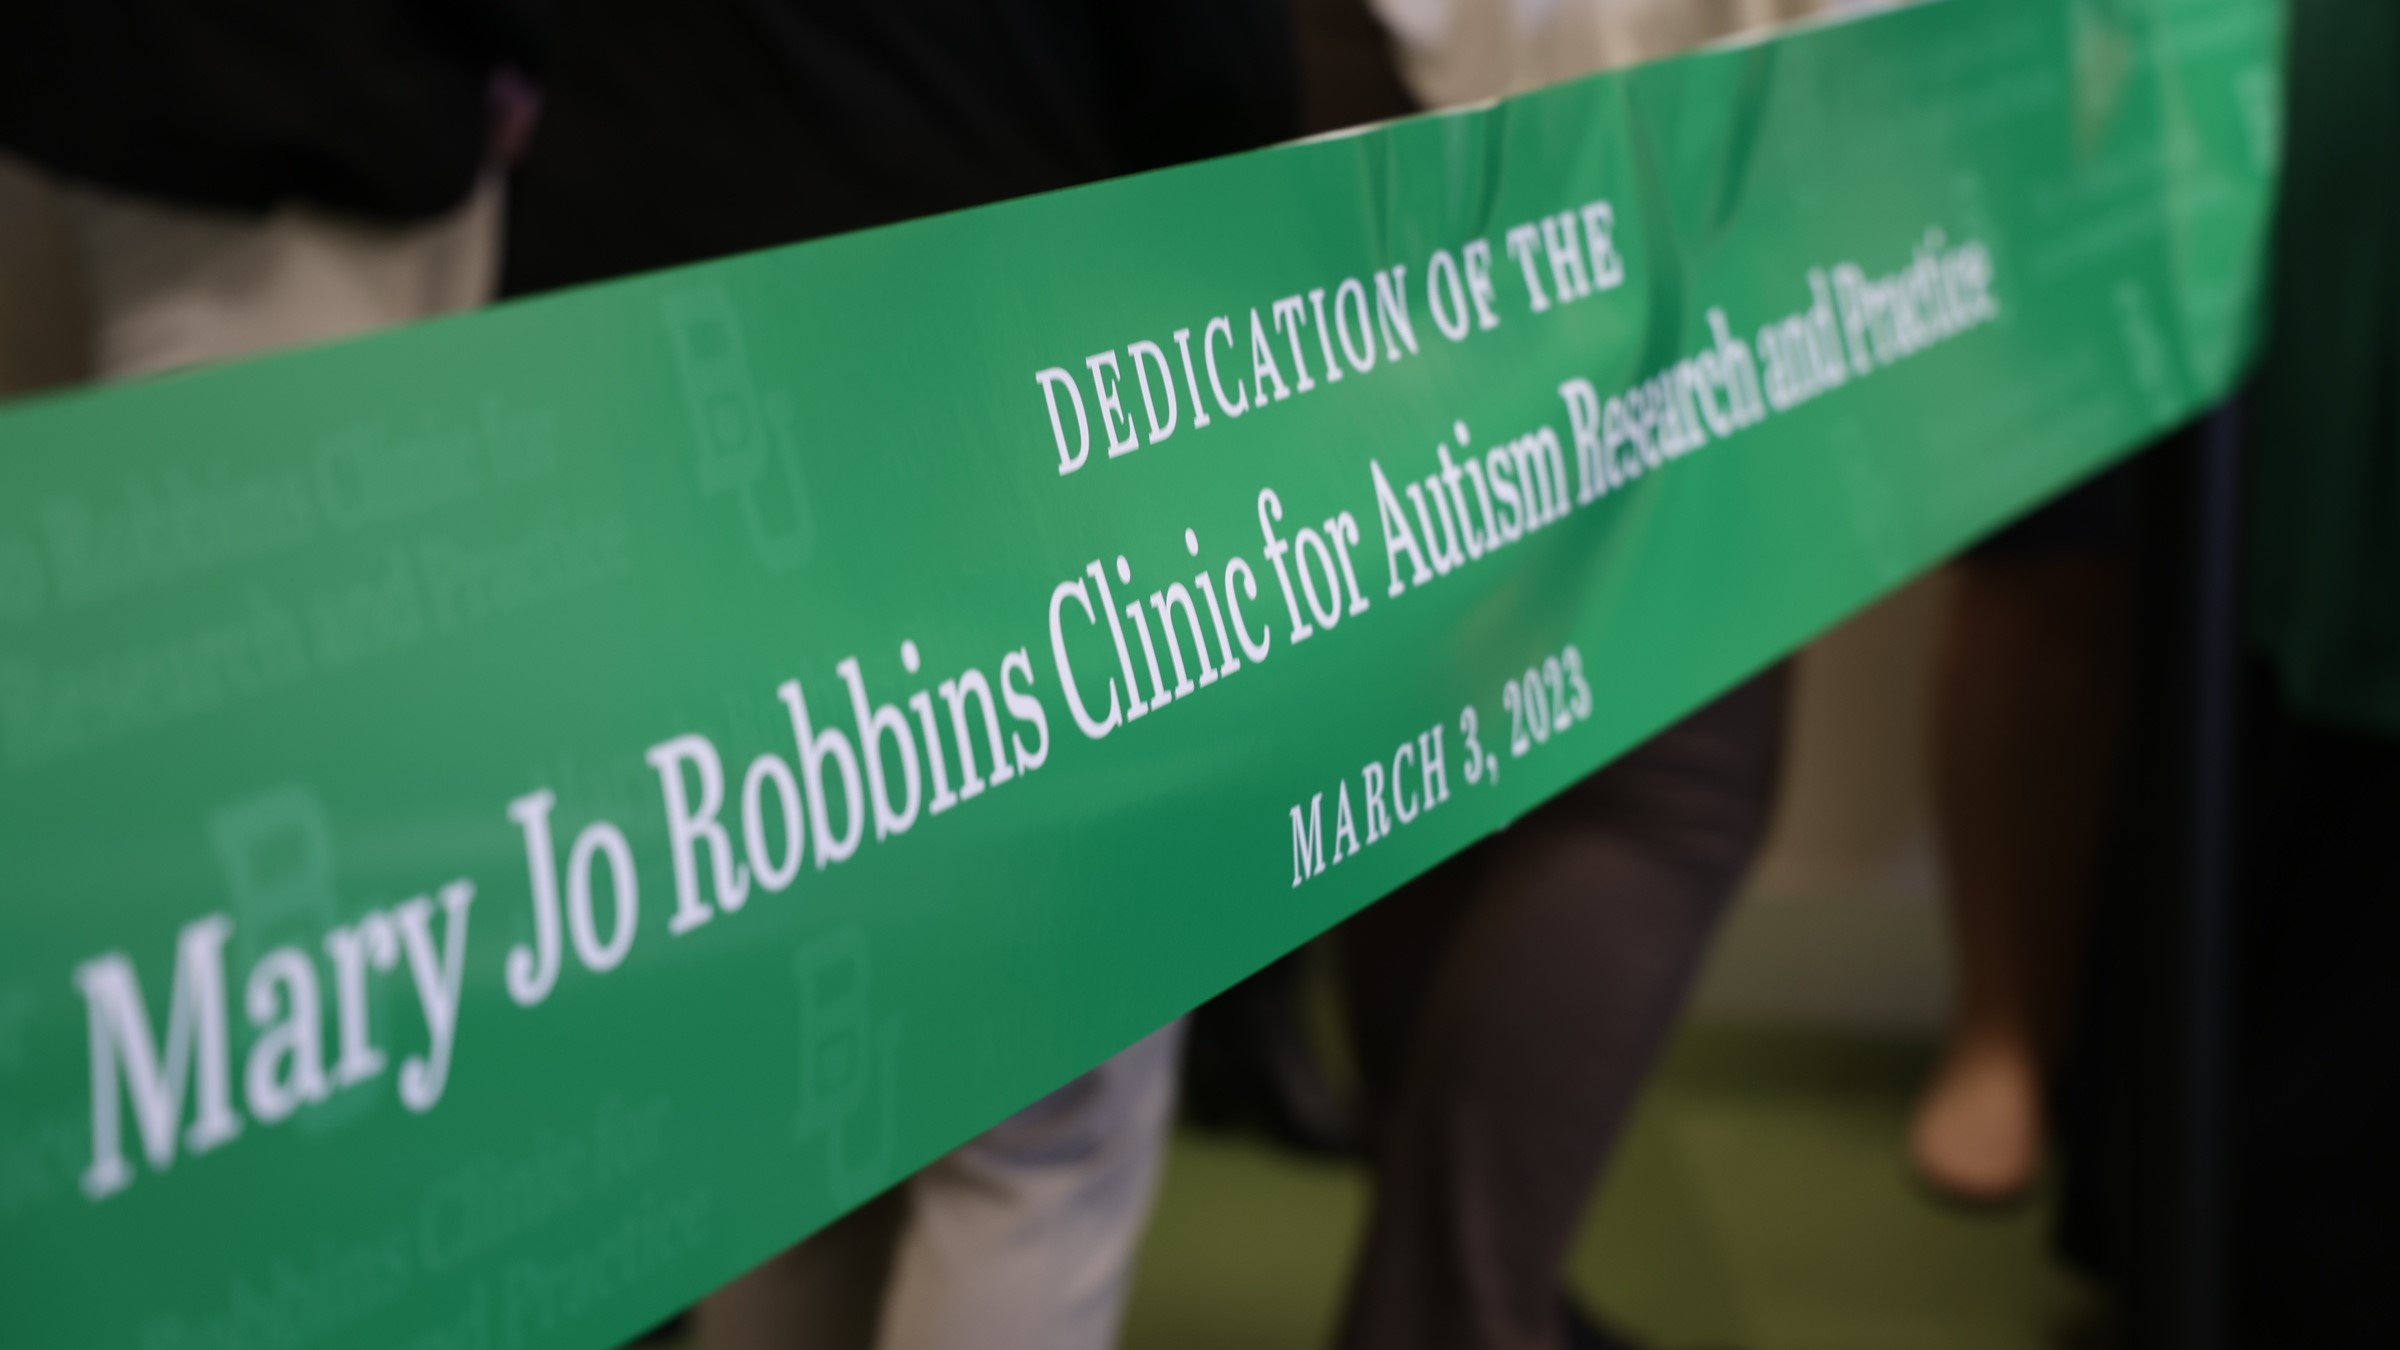 Robbins Clinic Dedication5